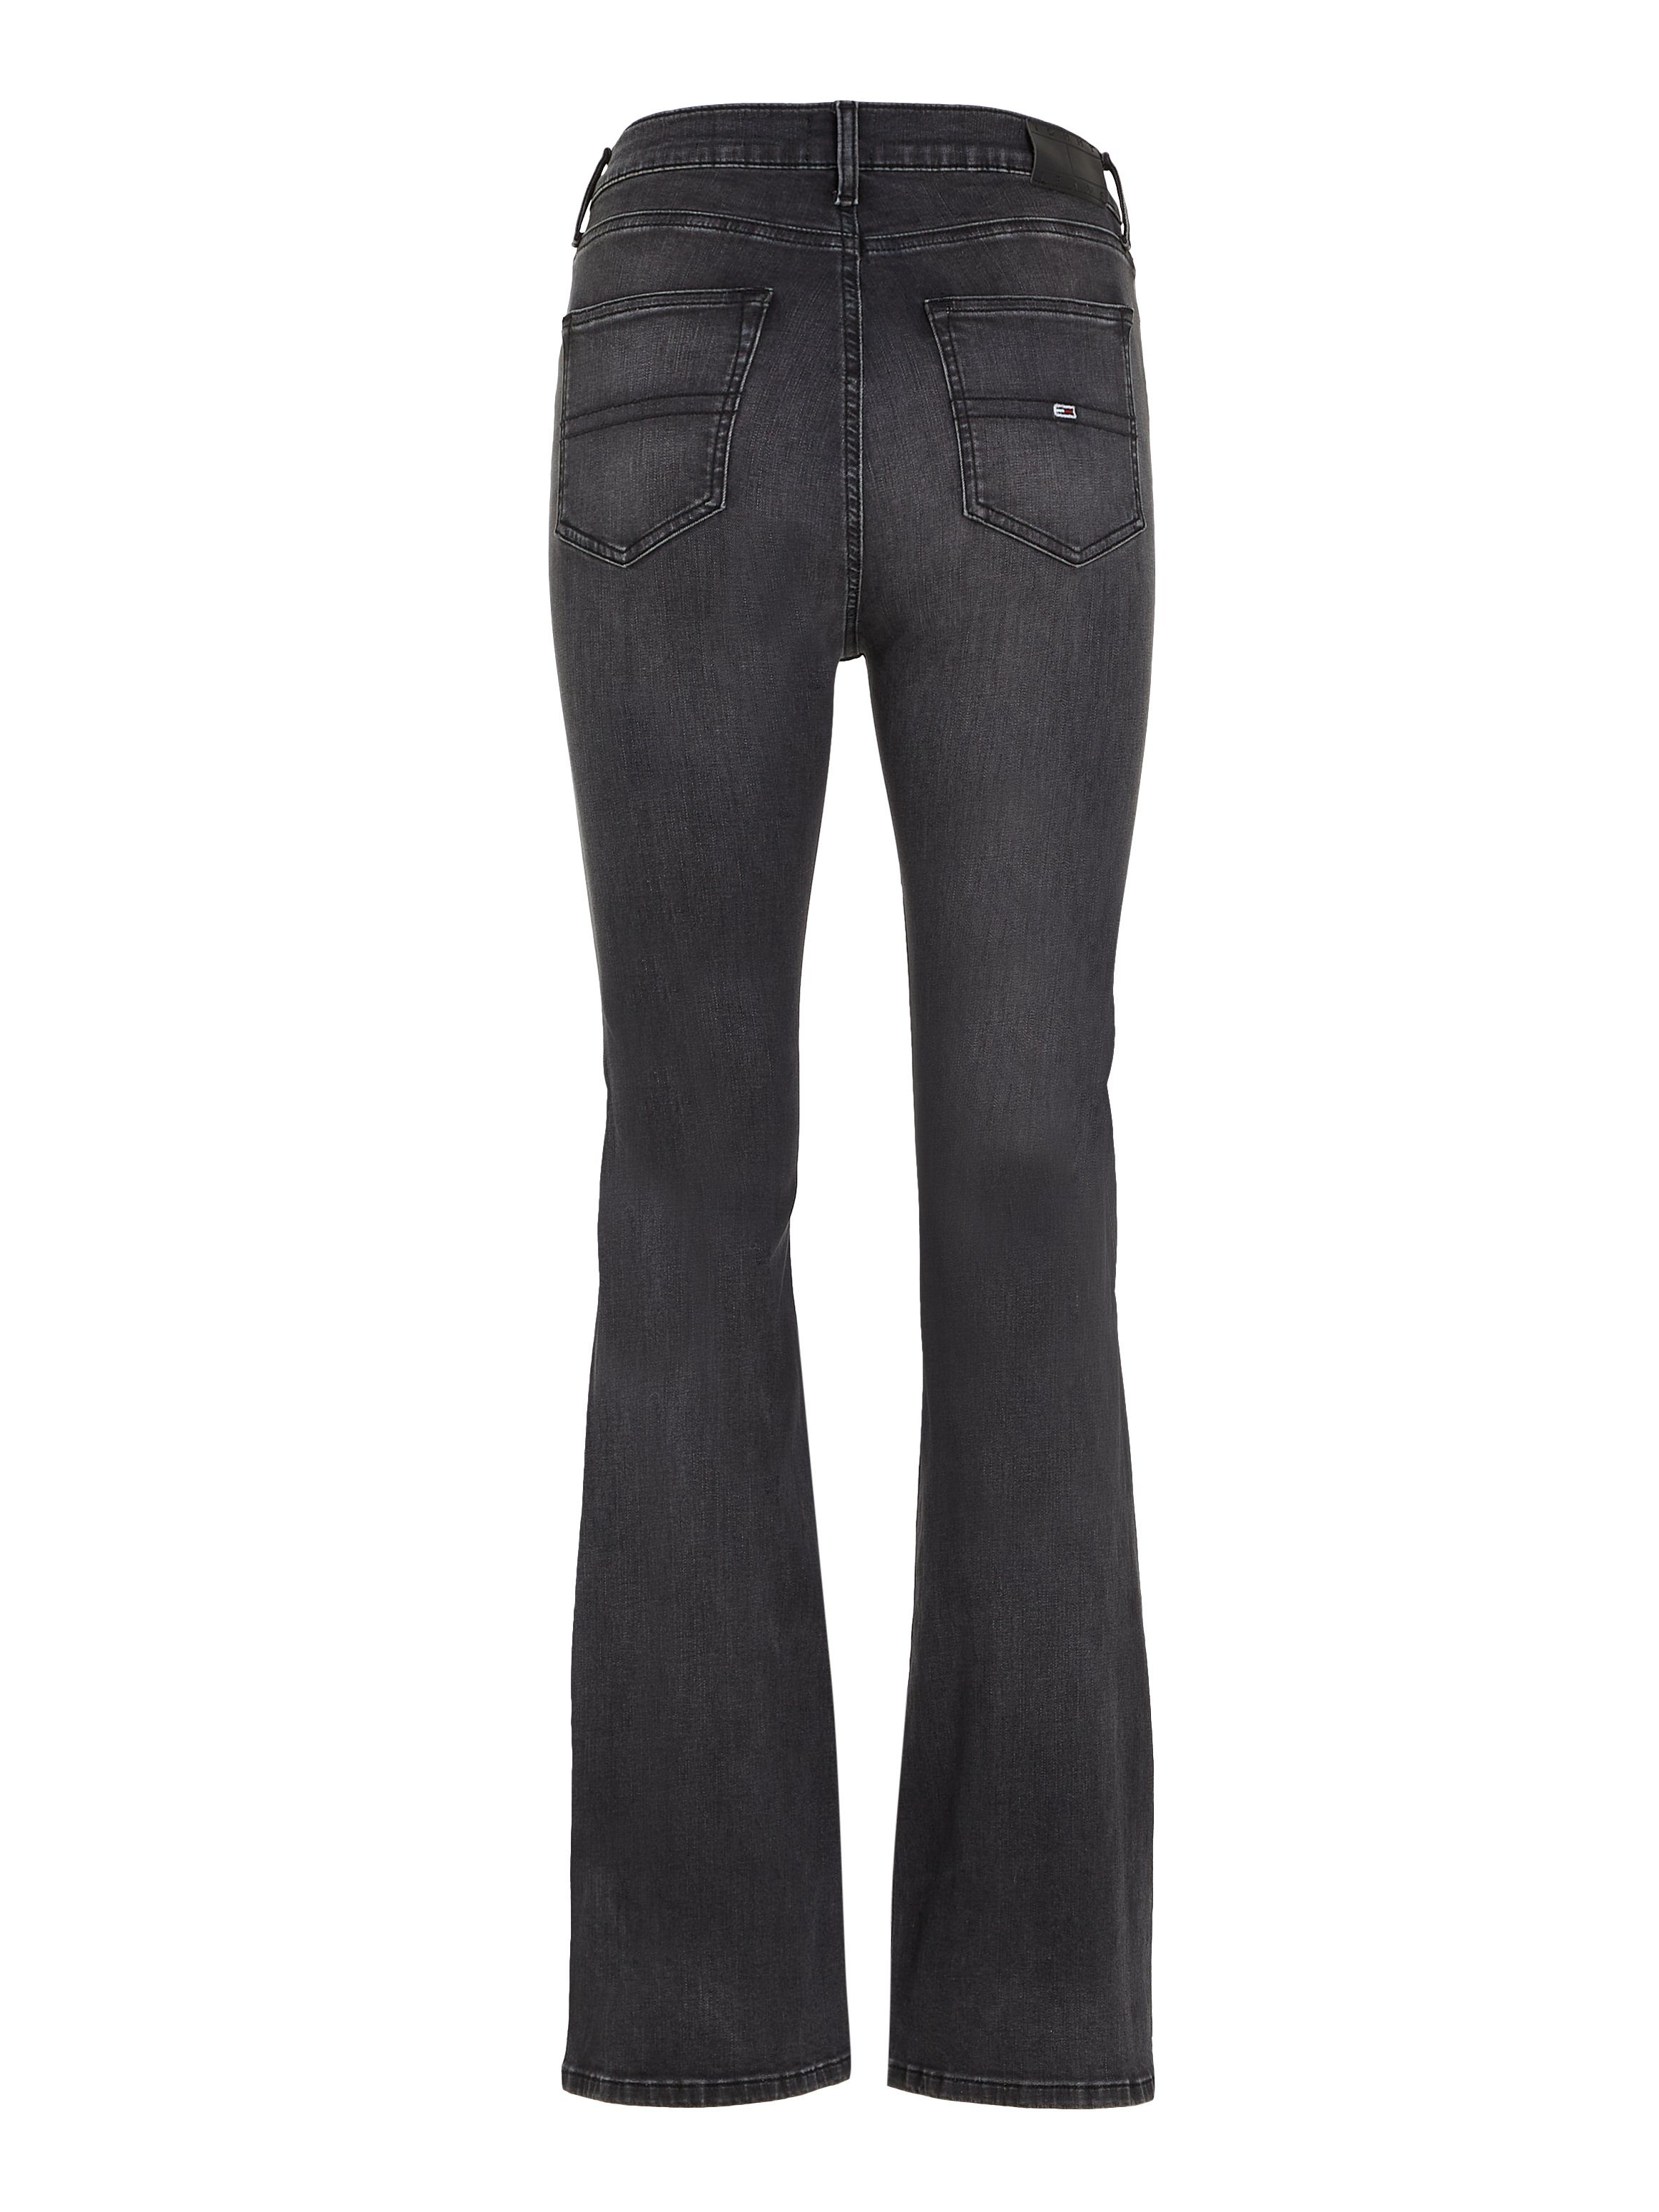 Jeans Bequeme Sylvia Tommy mit Markenlabel Jeans black30